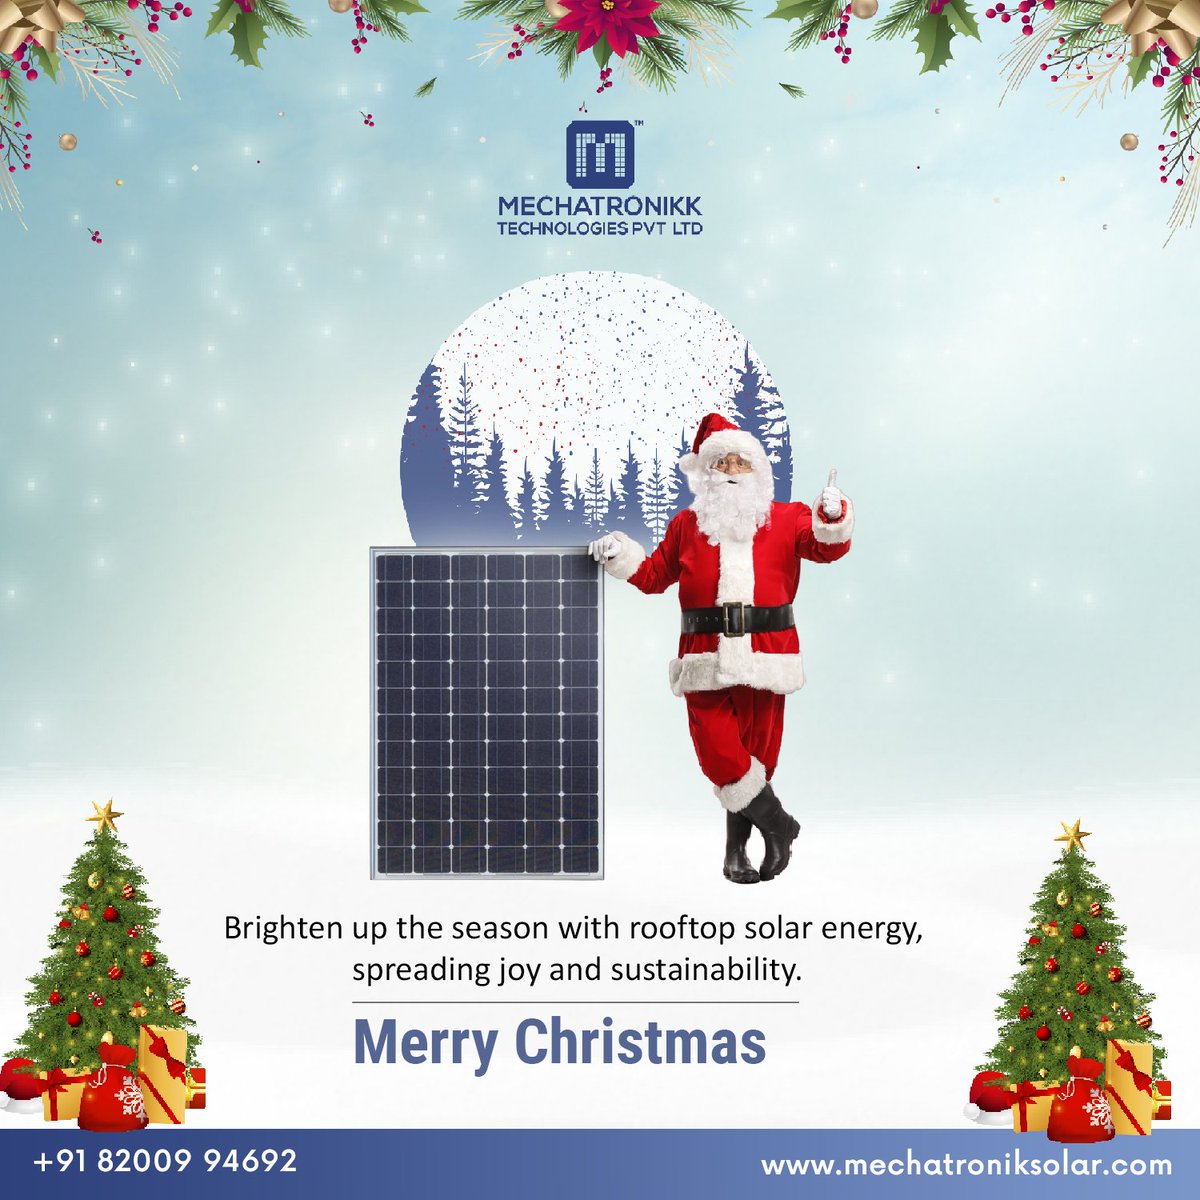 Brighten up the season with rooftop solar energy, spreading joy and sustainability.
Happy Christmas!
.
.
#Christmas #MerryChristmas #Christmas2023 #BestSolarCompany #SolarPanels #mechatroniksolar #Ahmedabad #Gujarat